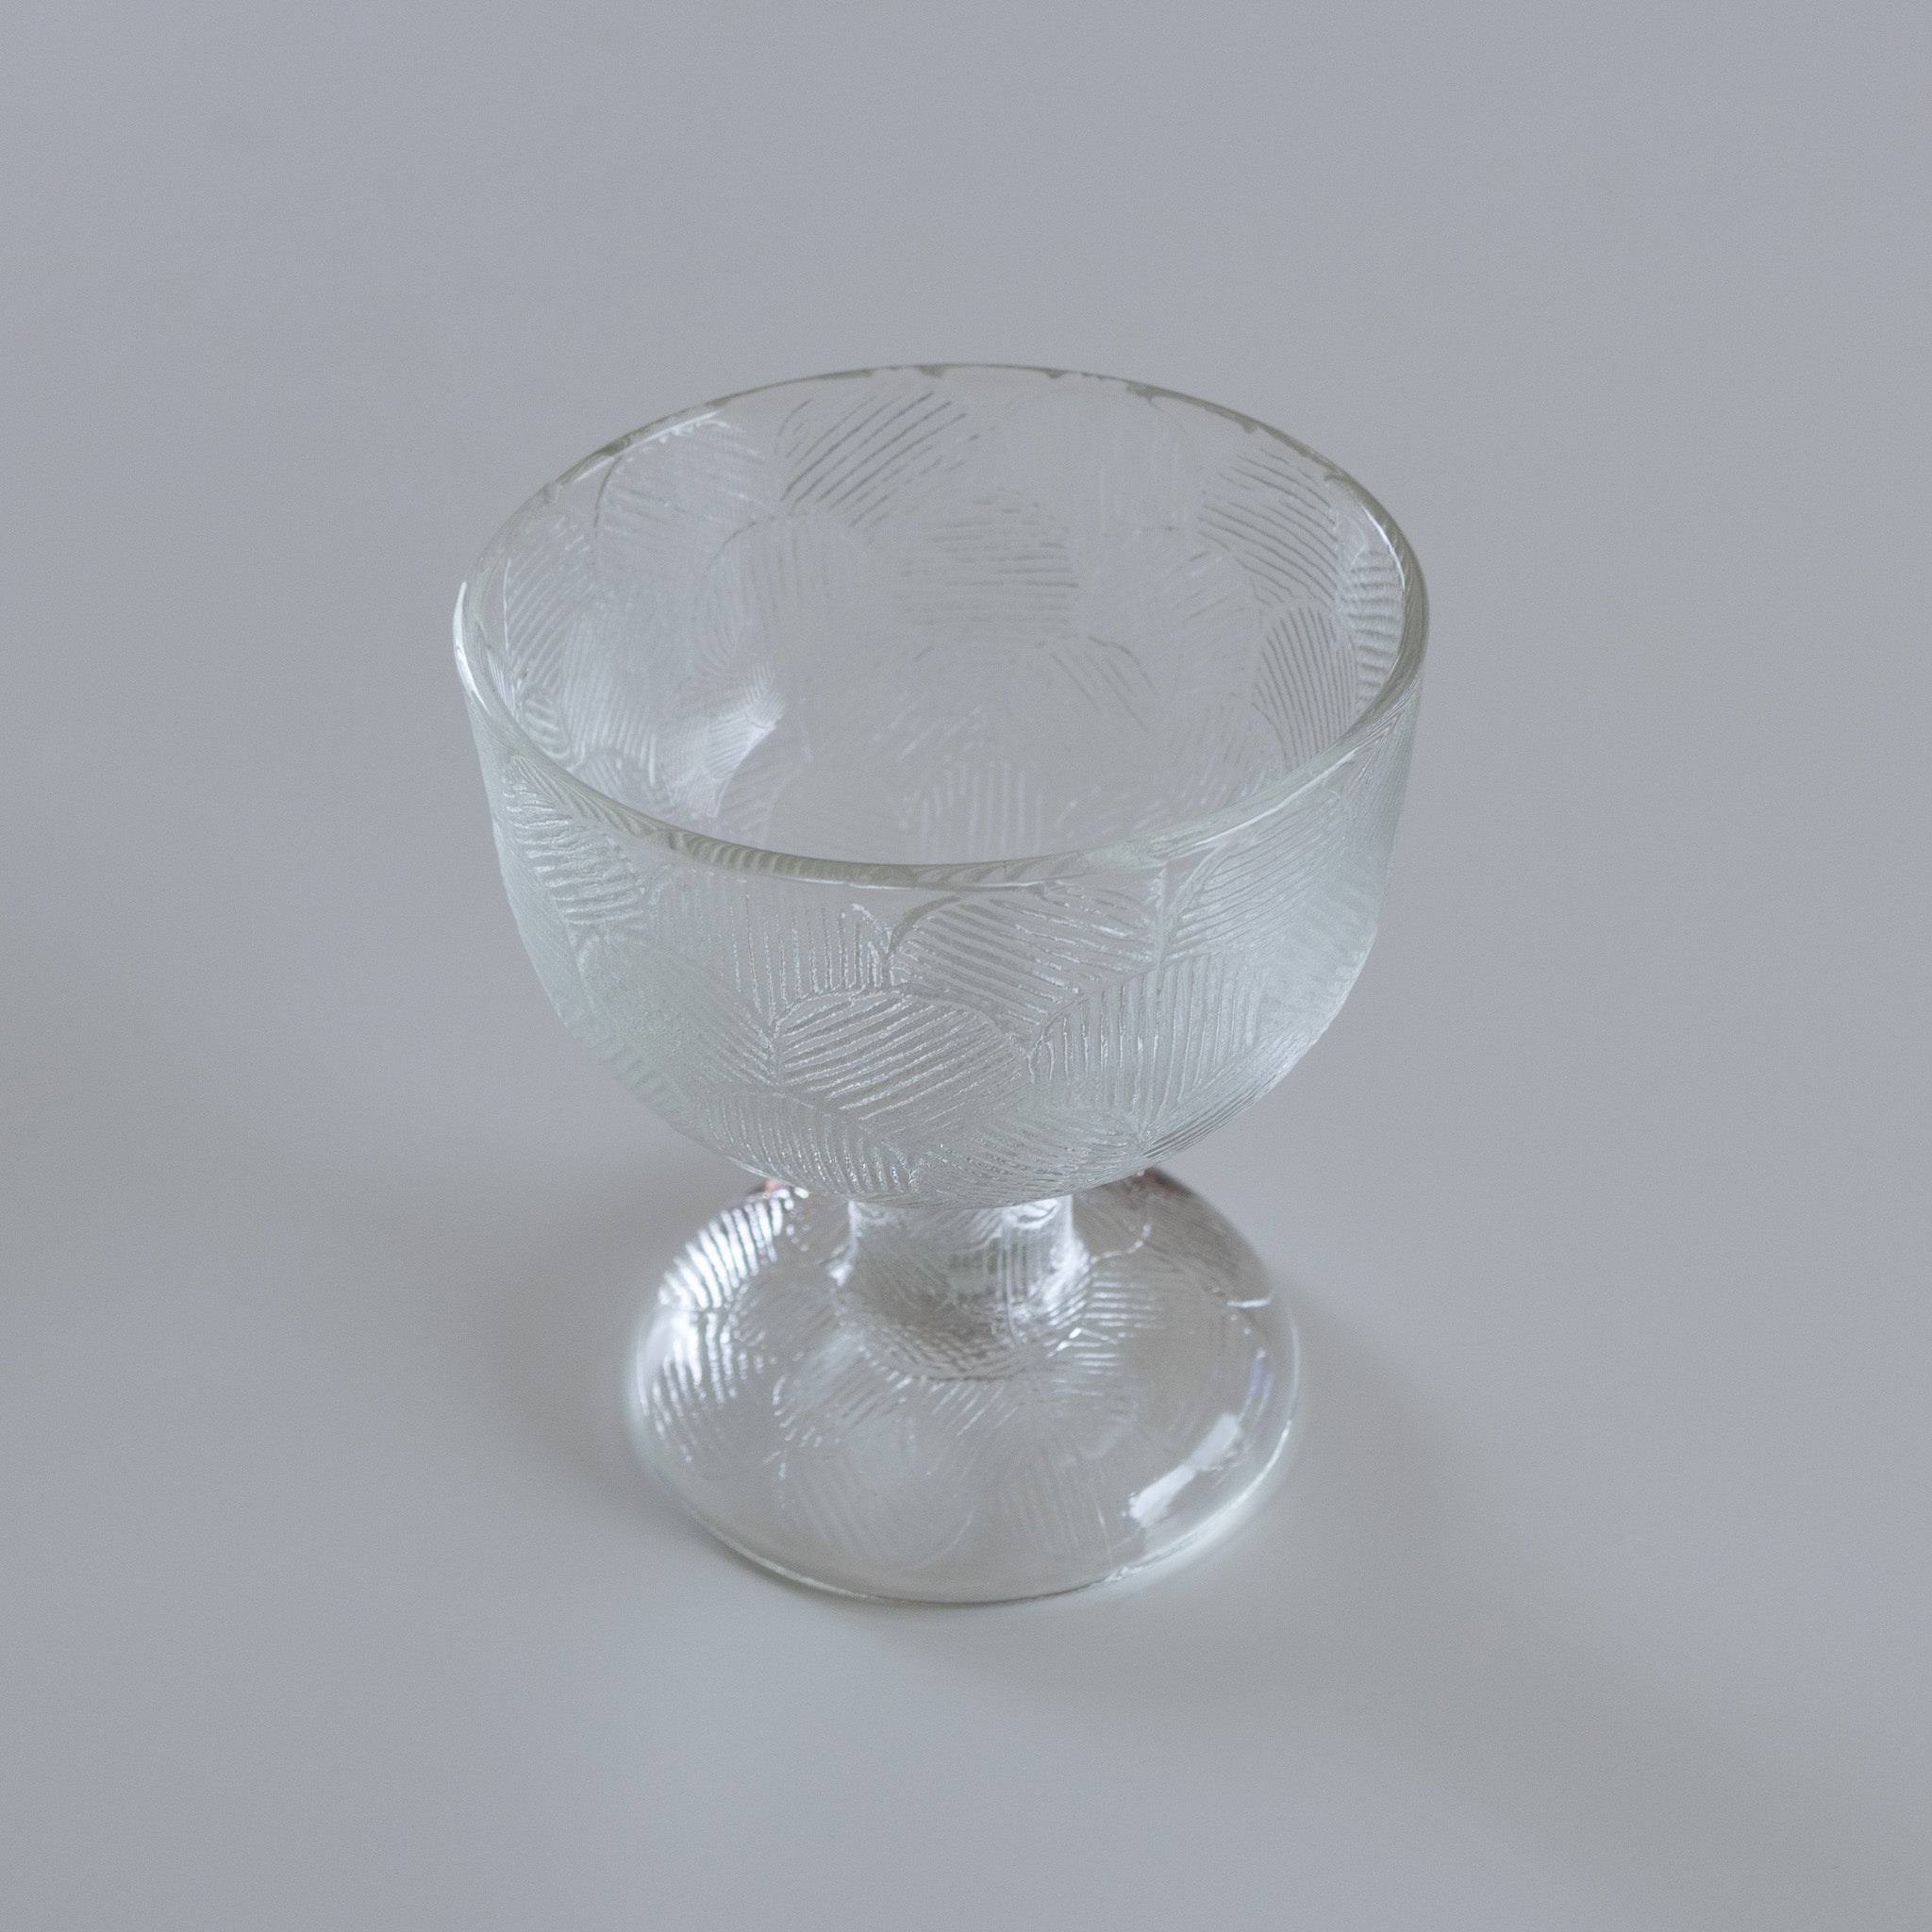 miranda (ミランダ) bowl 10.0cm / Nuutajärvi(arabia 